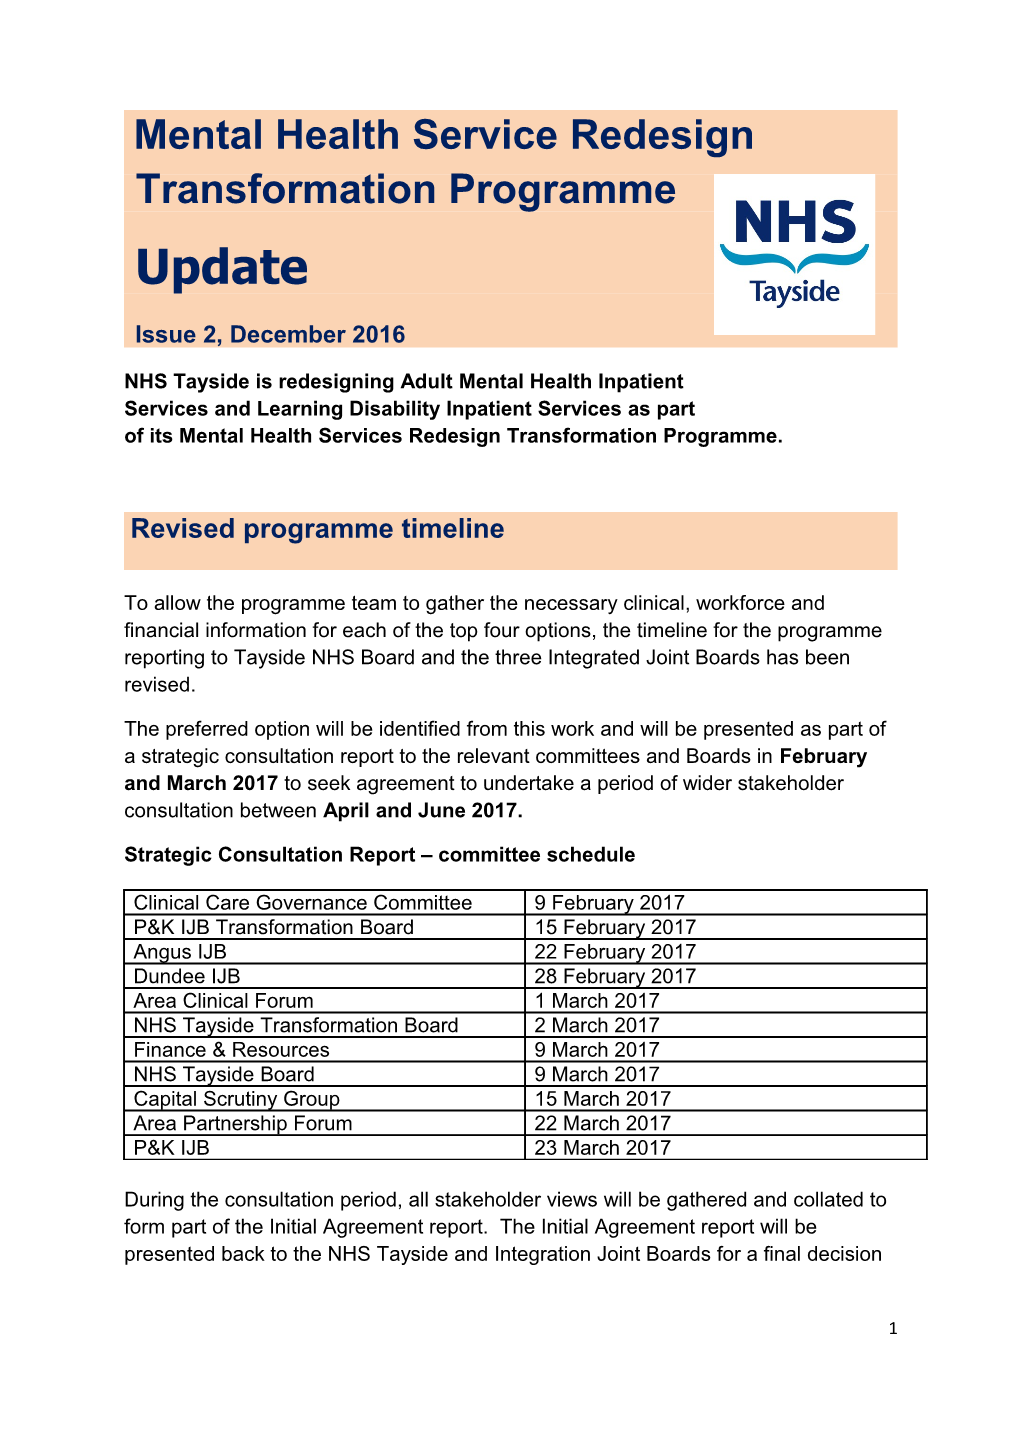 Mental Health Service Redesign Transformation Programme